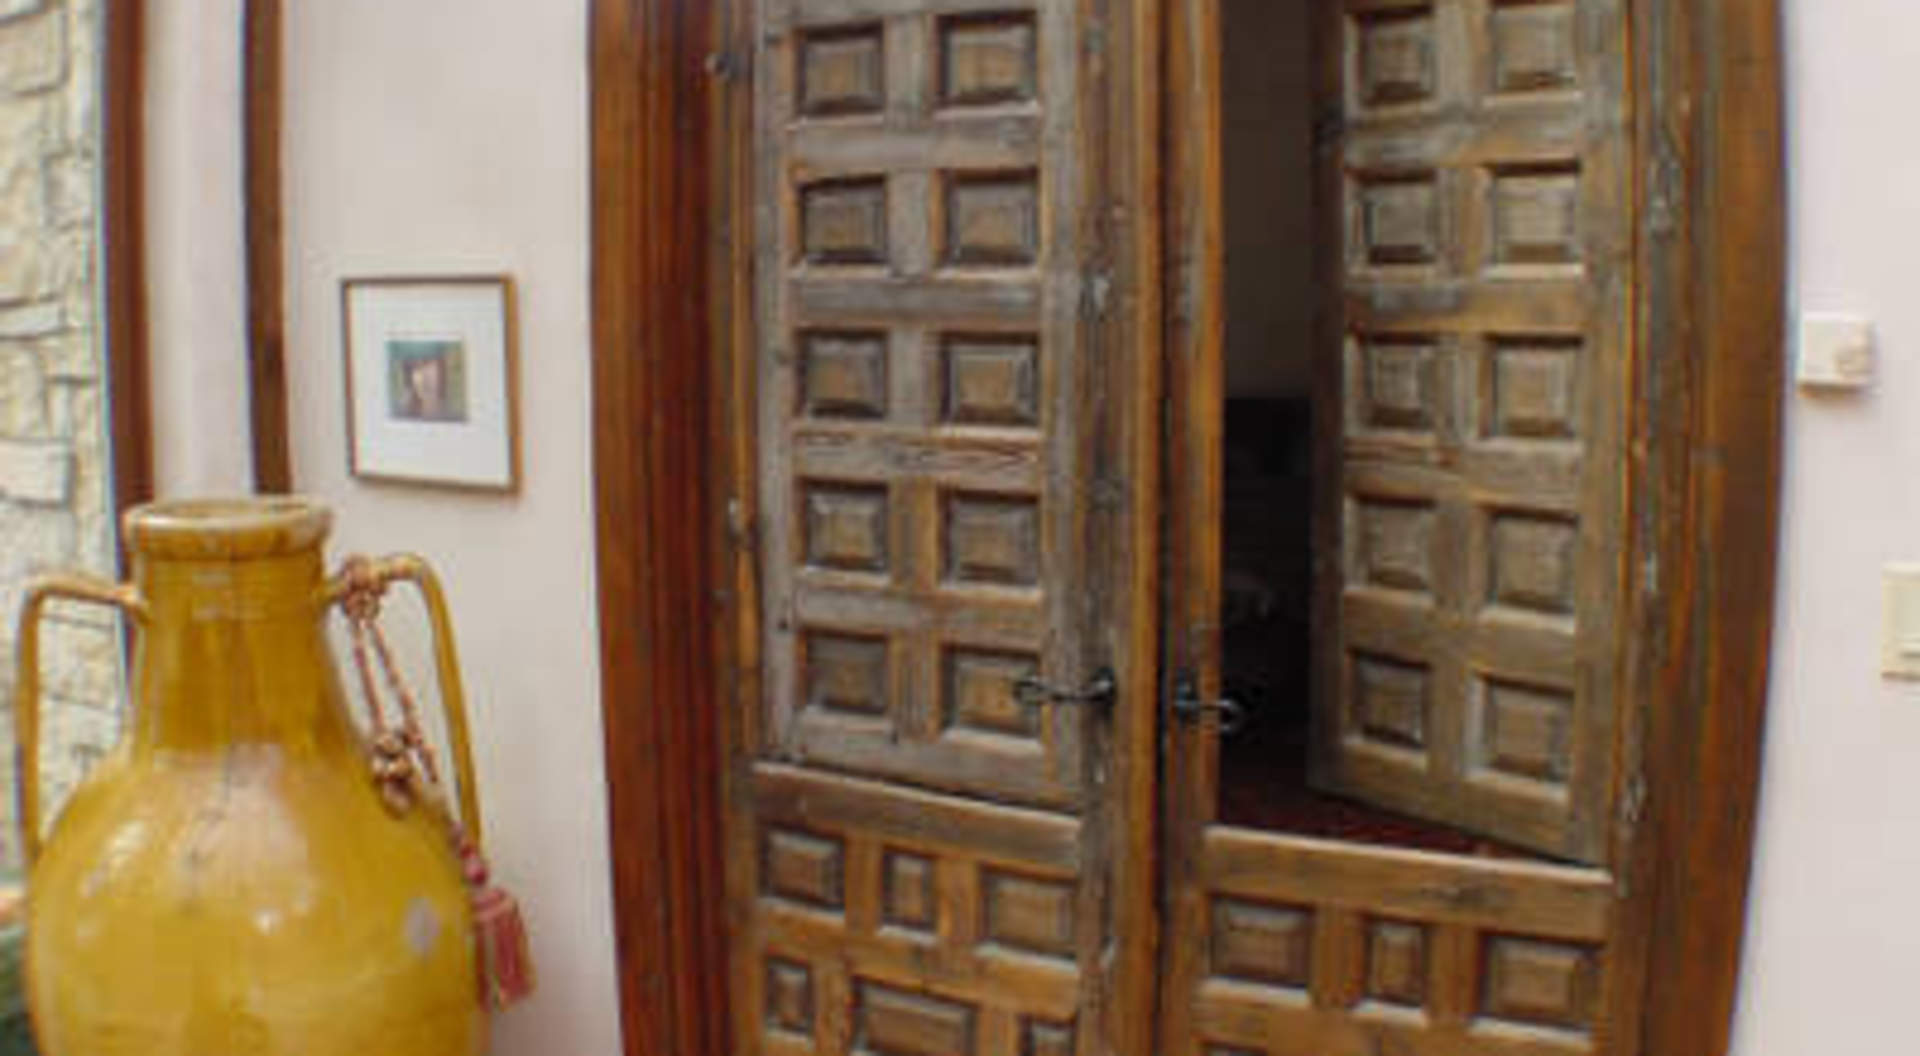 Unique 200 Year Old Doors to Master Bedroom